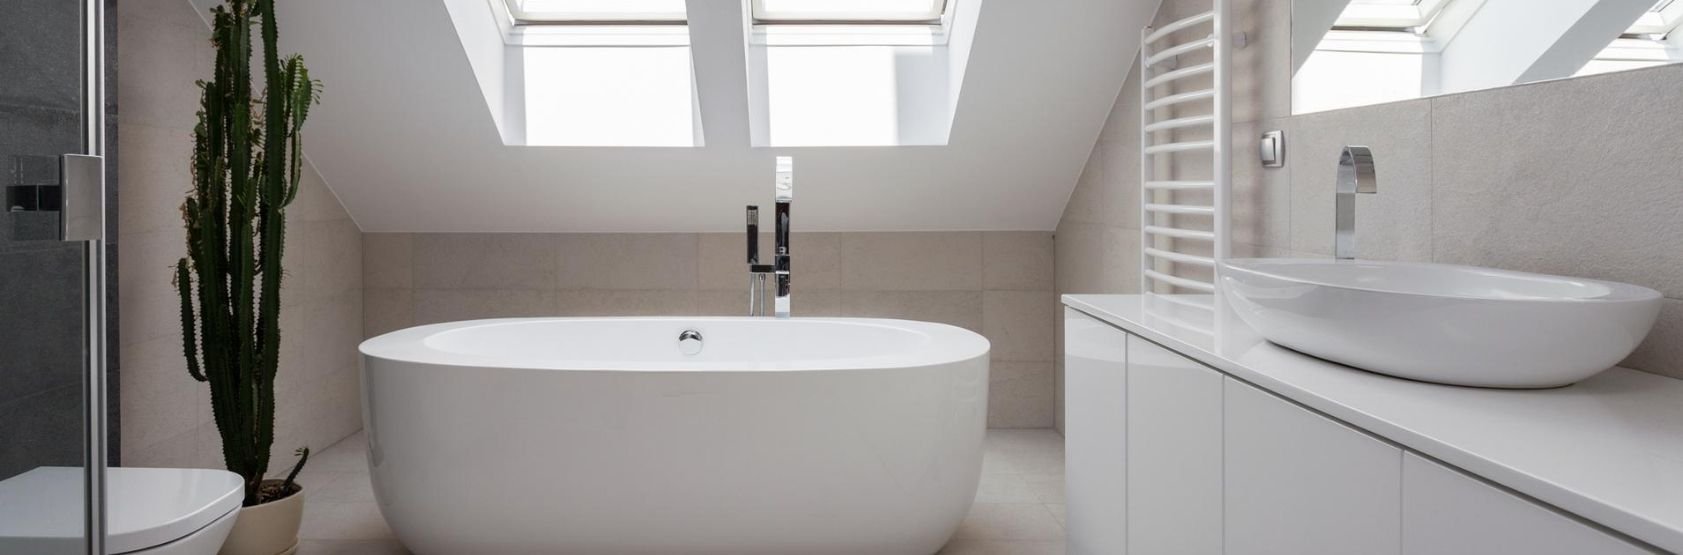 Bathroom-Fitting-Services-Dorset-Hampshire_16